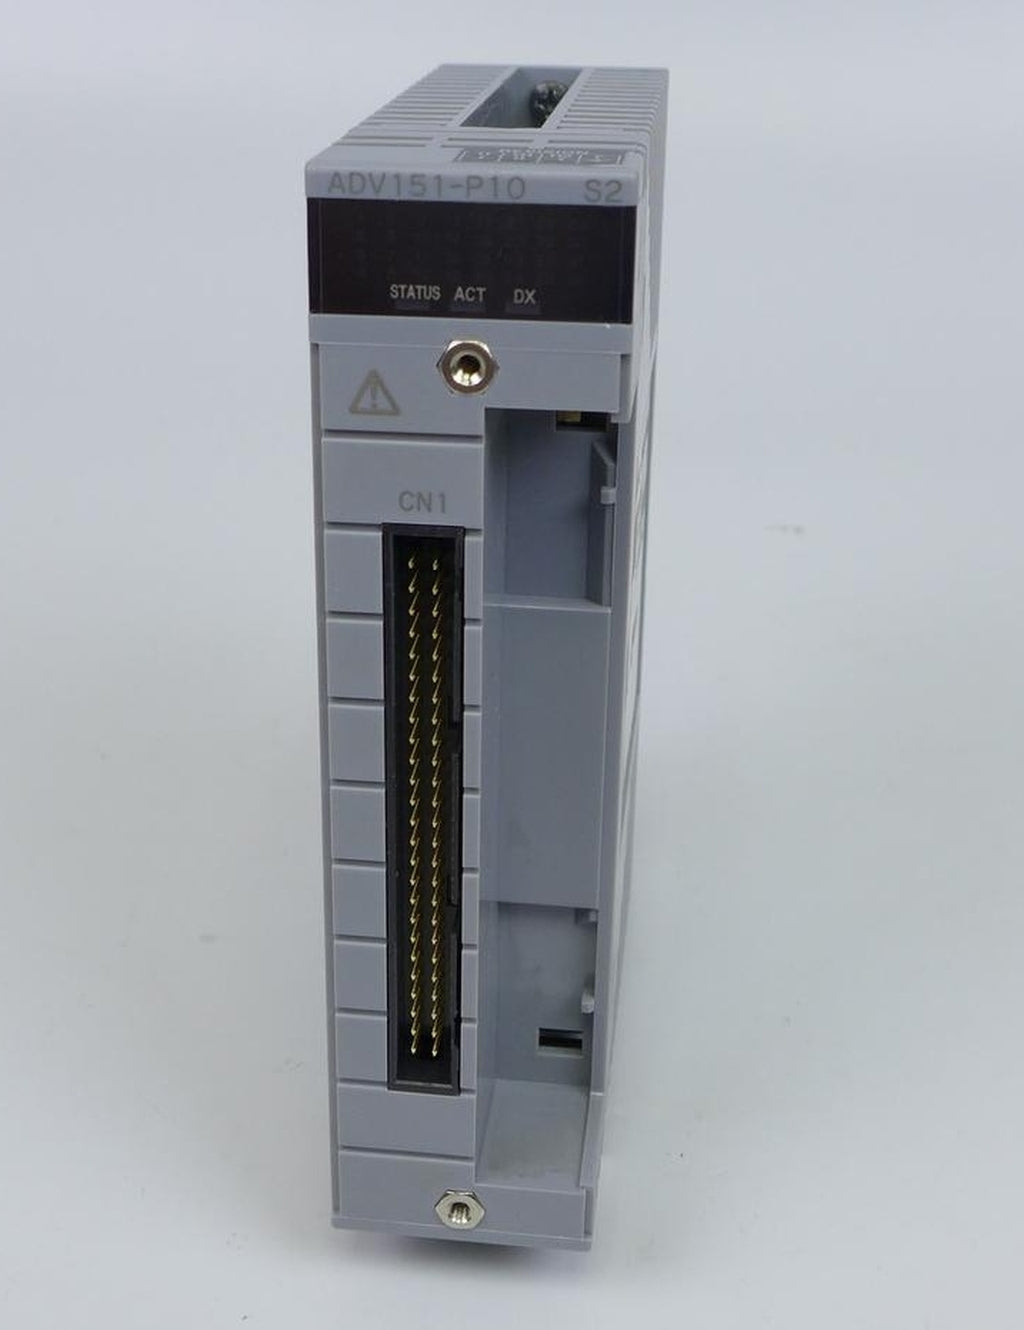 PP2288 Digital Input Module Yokogawa ADV151-P10 S2